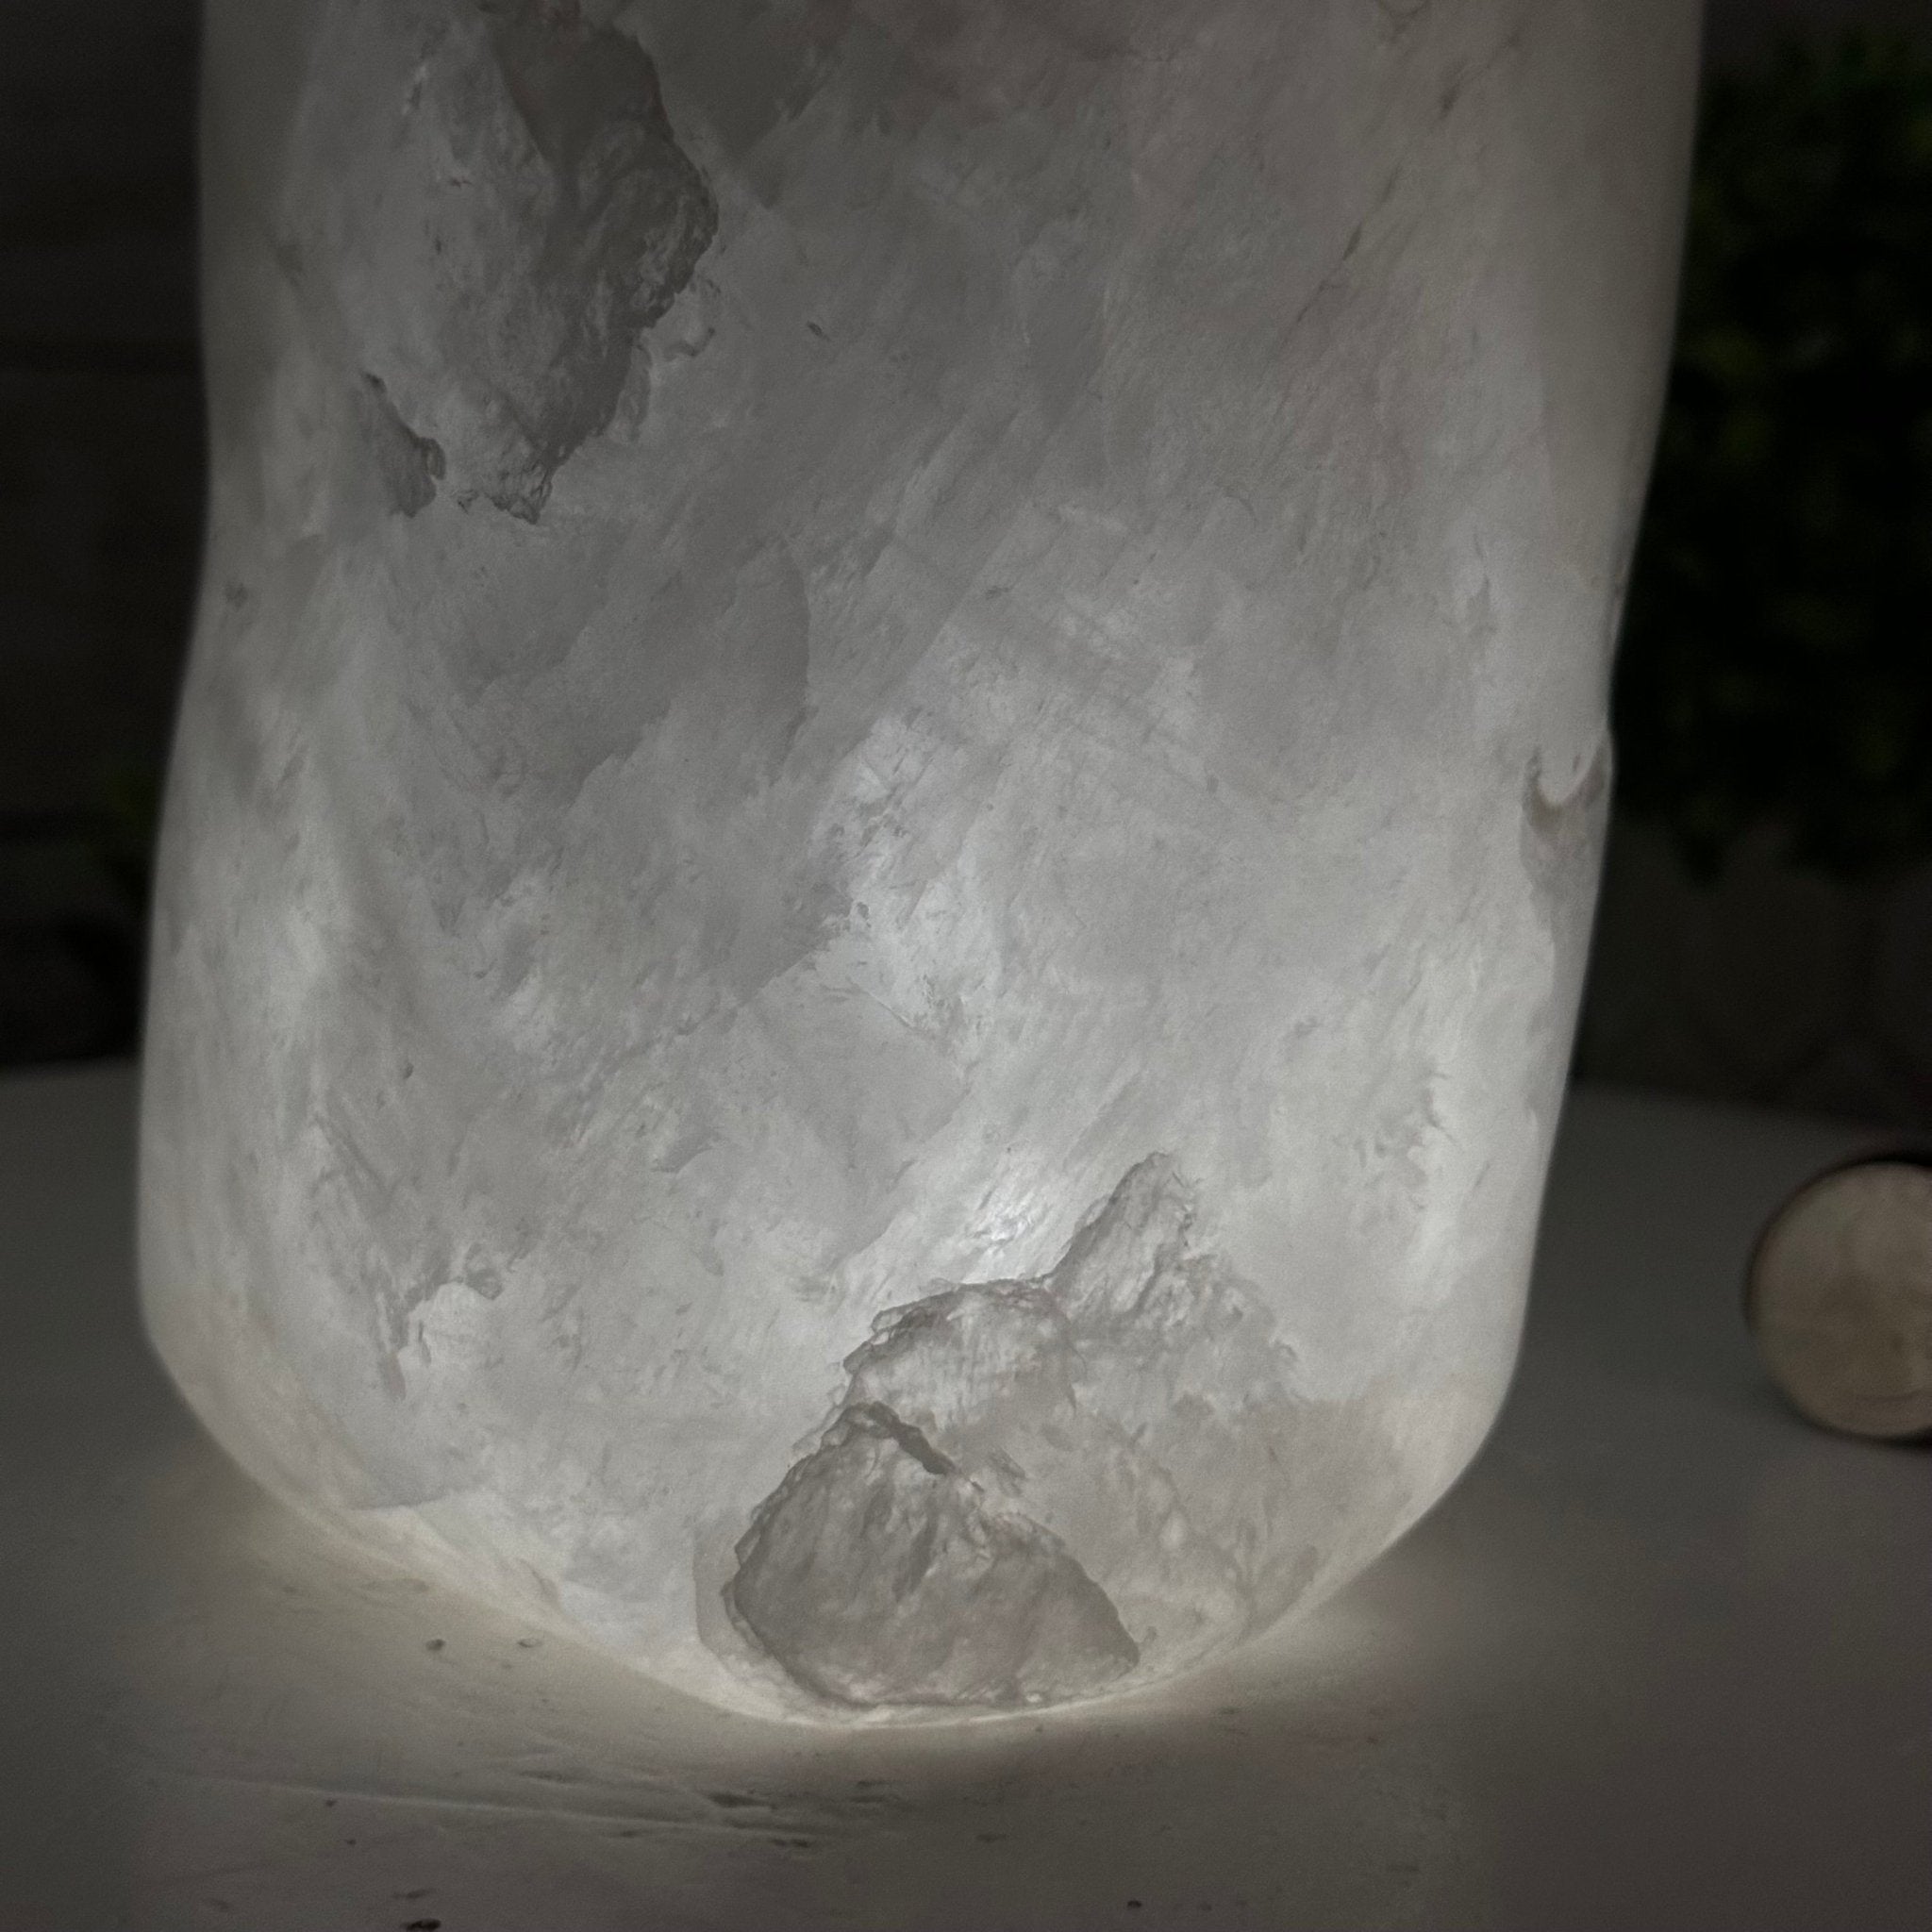 Polished Milky Quartz Crystal Night Light, 7.6 lbs & 8.5" Tall #5801MQ-003 - Brazil GemsBrazil GemsPolished Milky Quartz Crystal Night Light, 7.6 lbs & 8.5" Tall #5801MQ-003Night Lights5801MQ-003